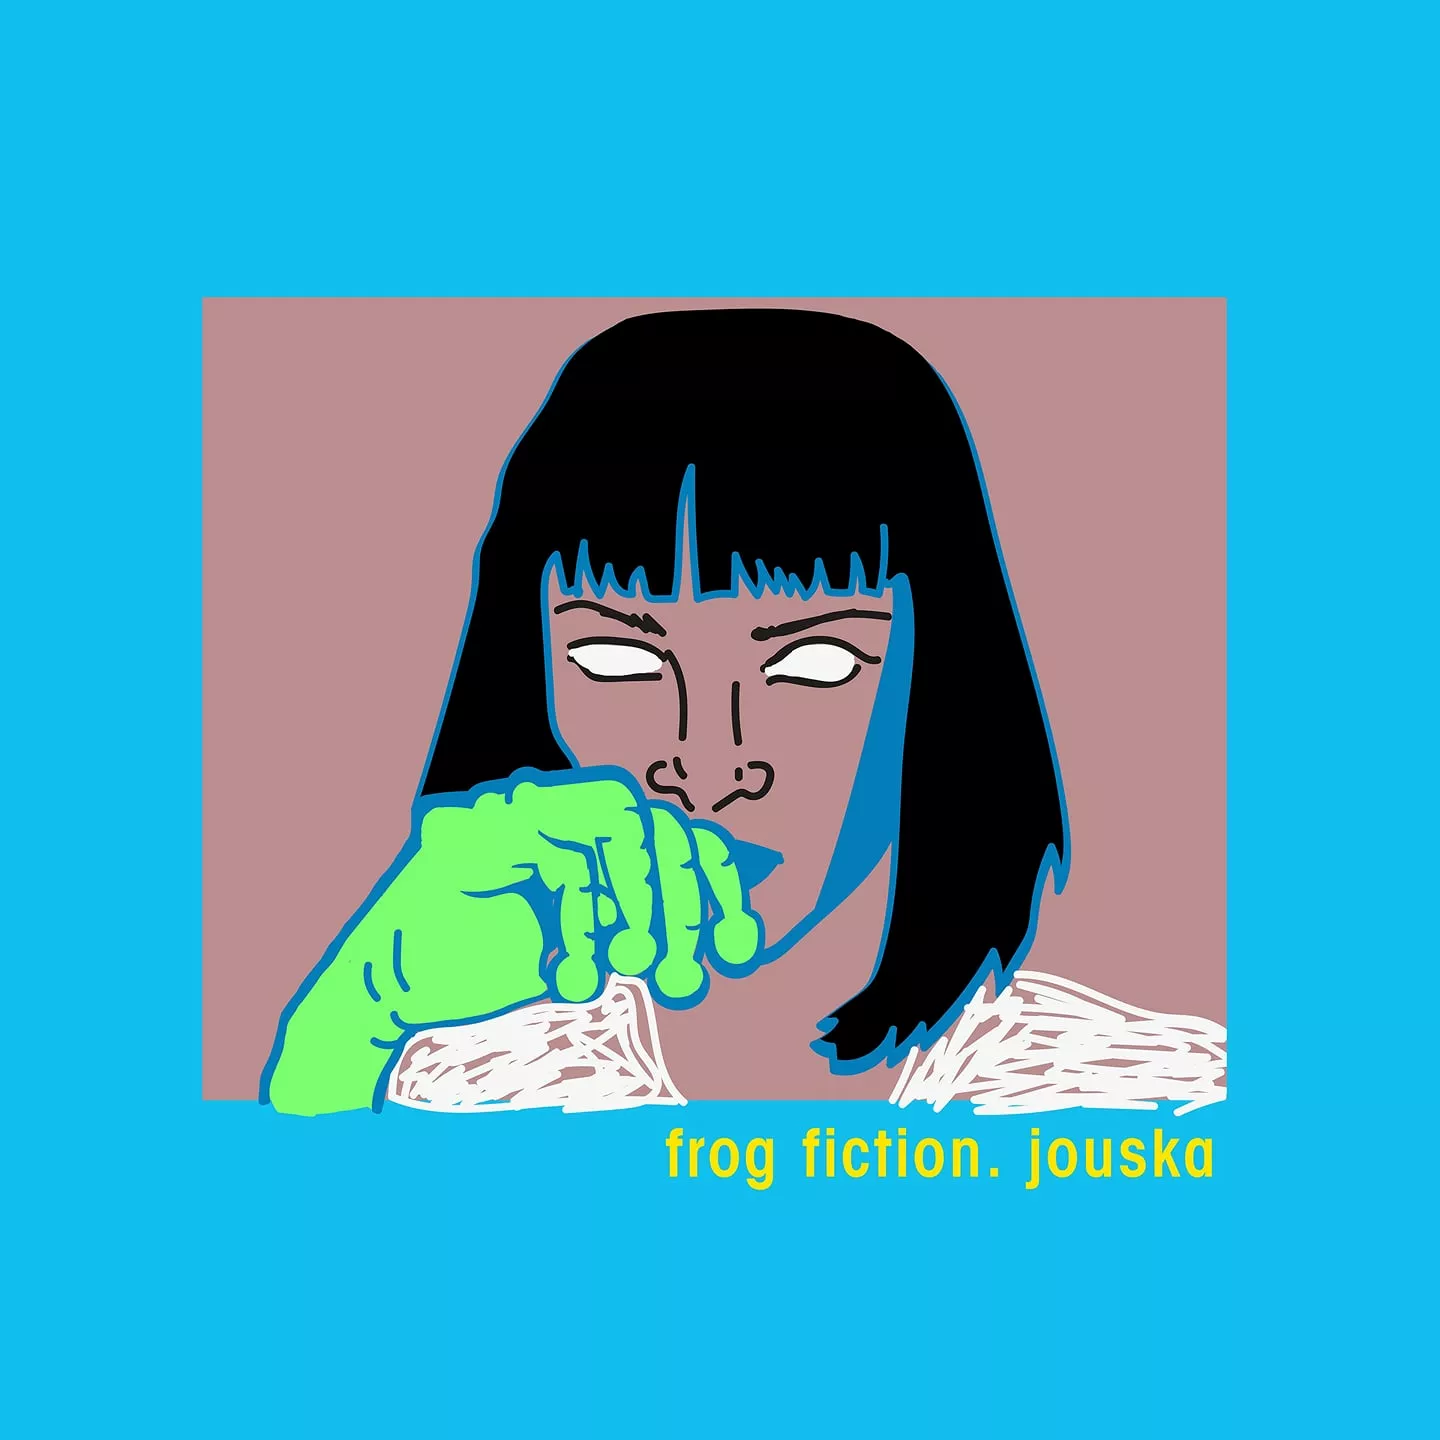 Frog Fiction - Jouska